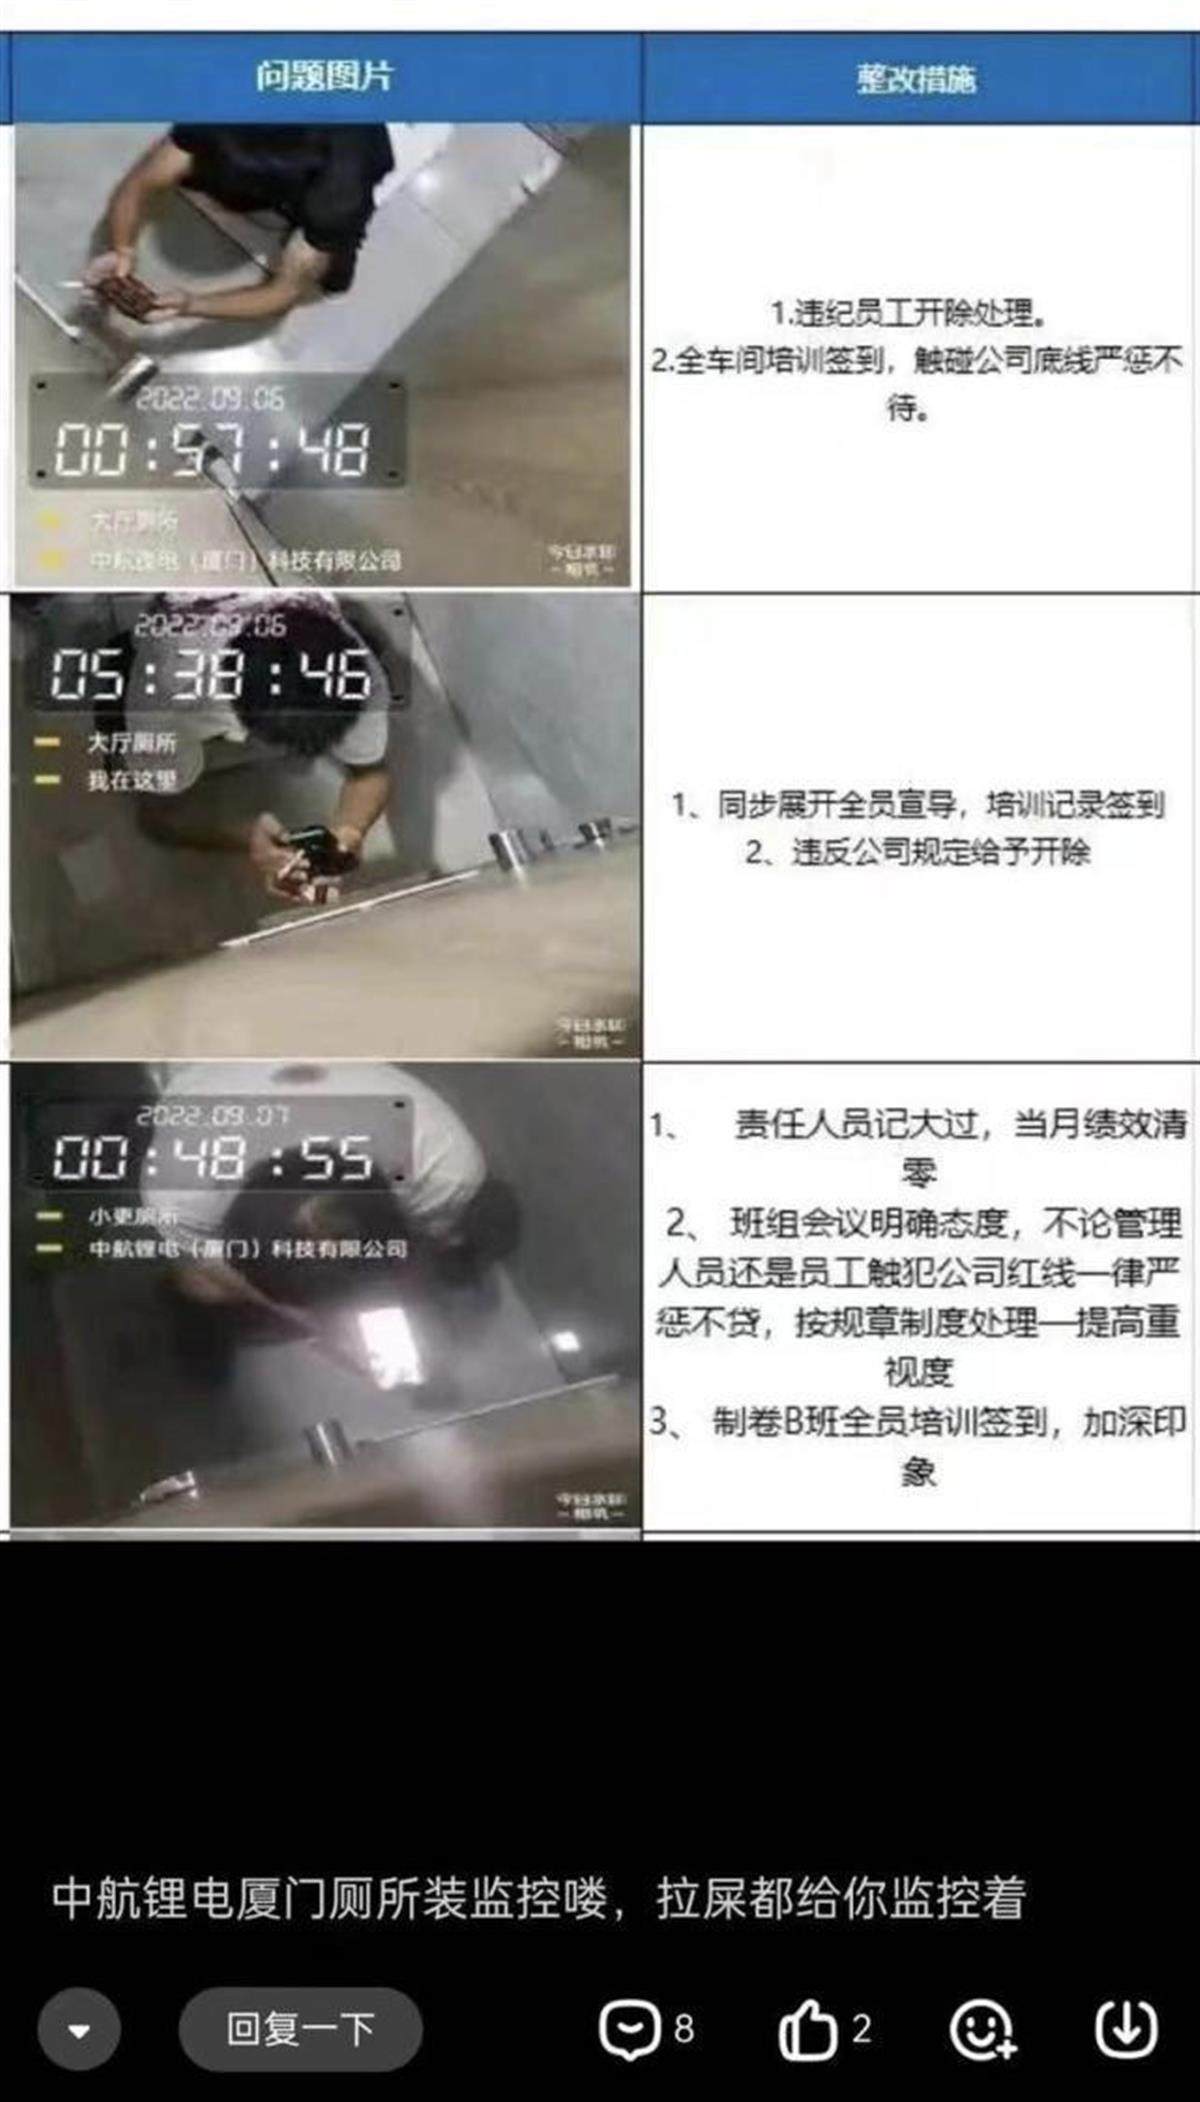 A viral image shows a surveillance camera catching three men smoking in a toilet. Photo: Baidu